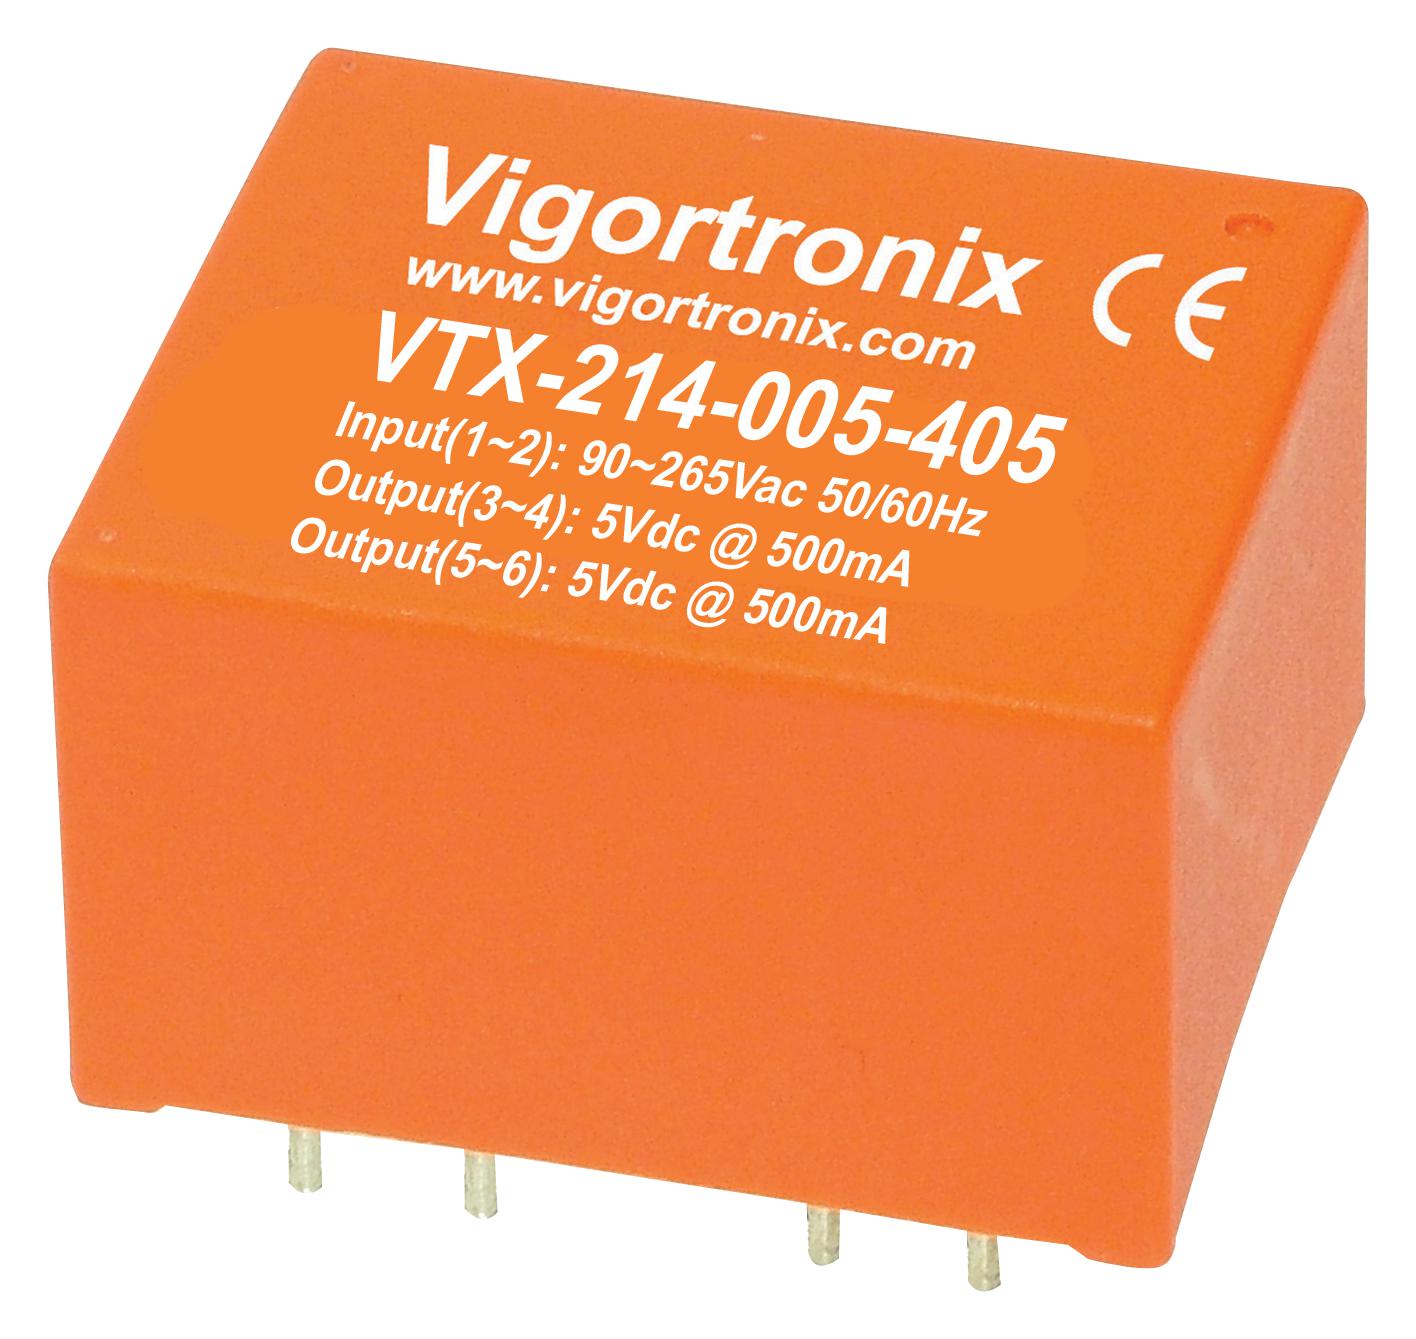 VTX-214-005-412 POWER SUPPLY, AC-DC, 12V, 0.166A VIGORTRONIX